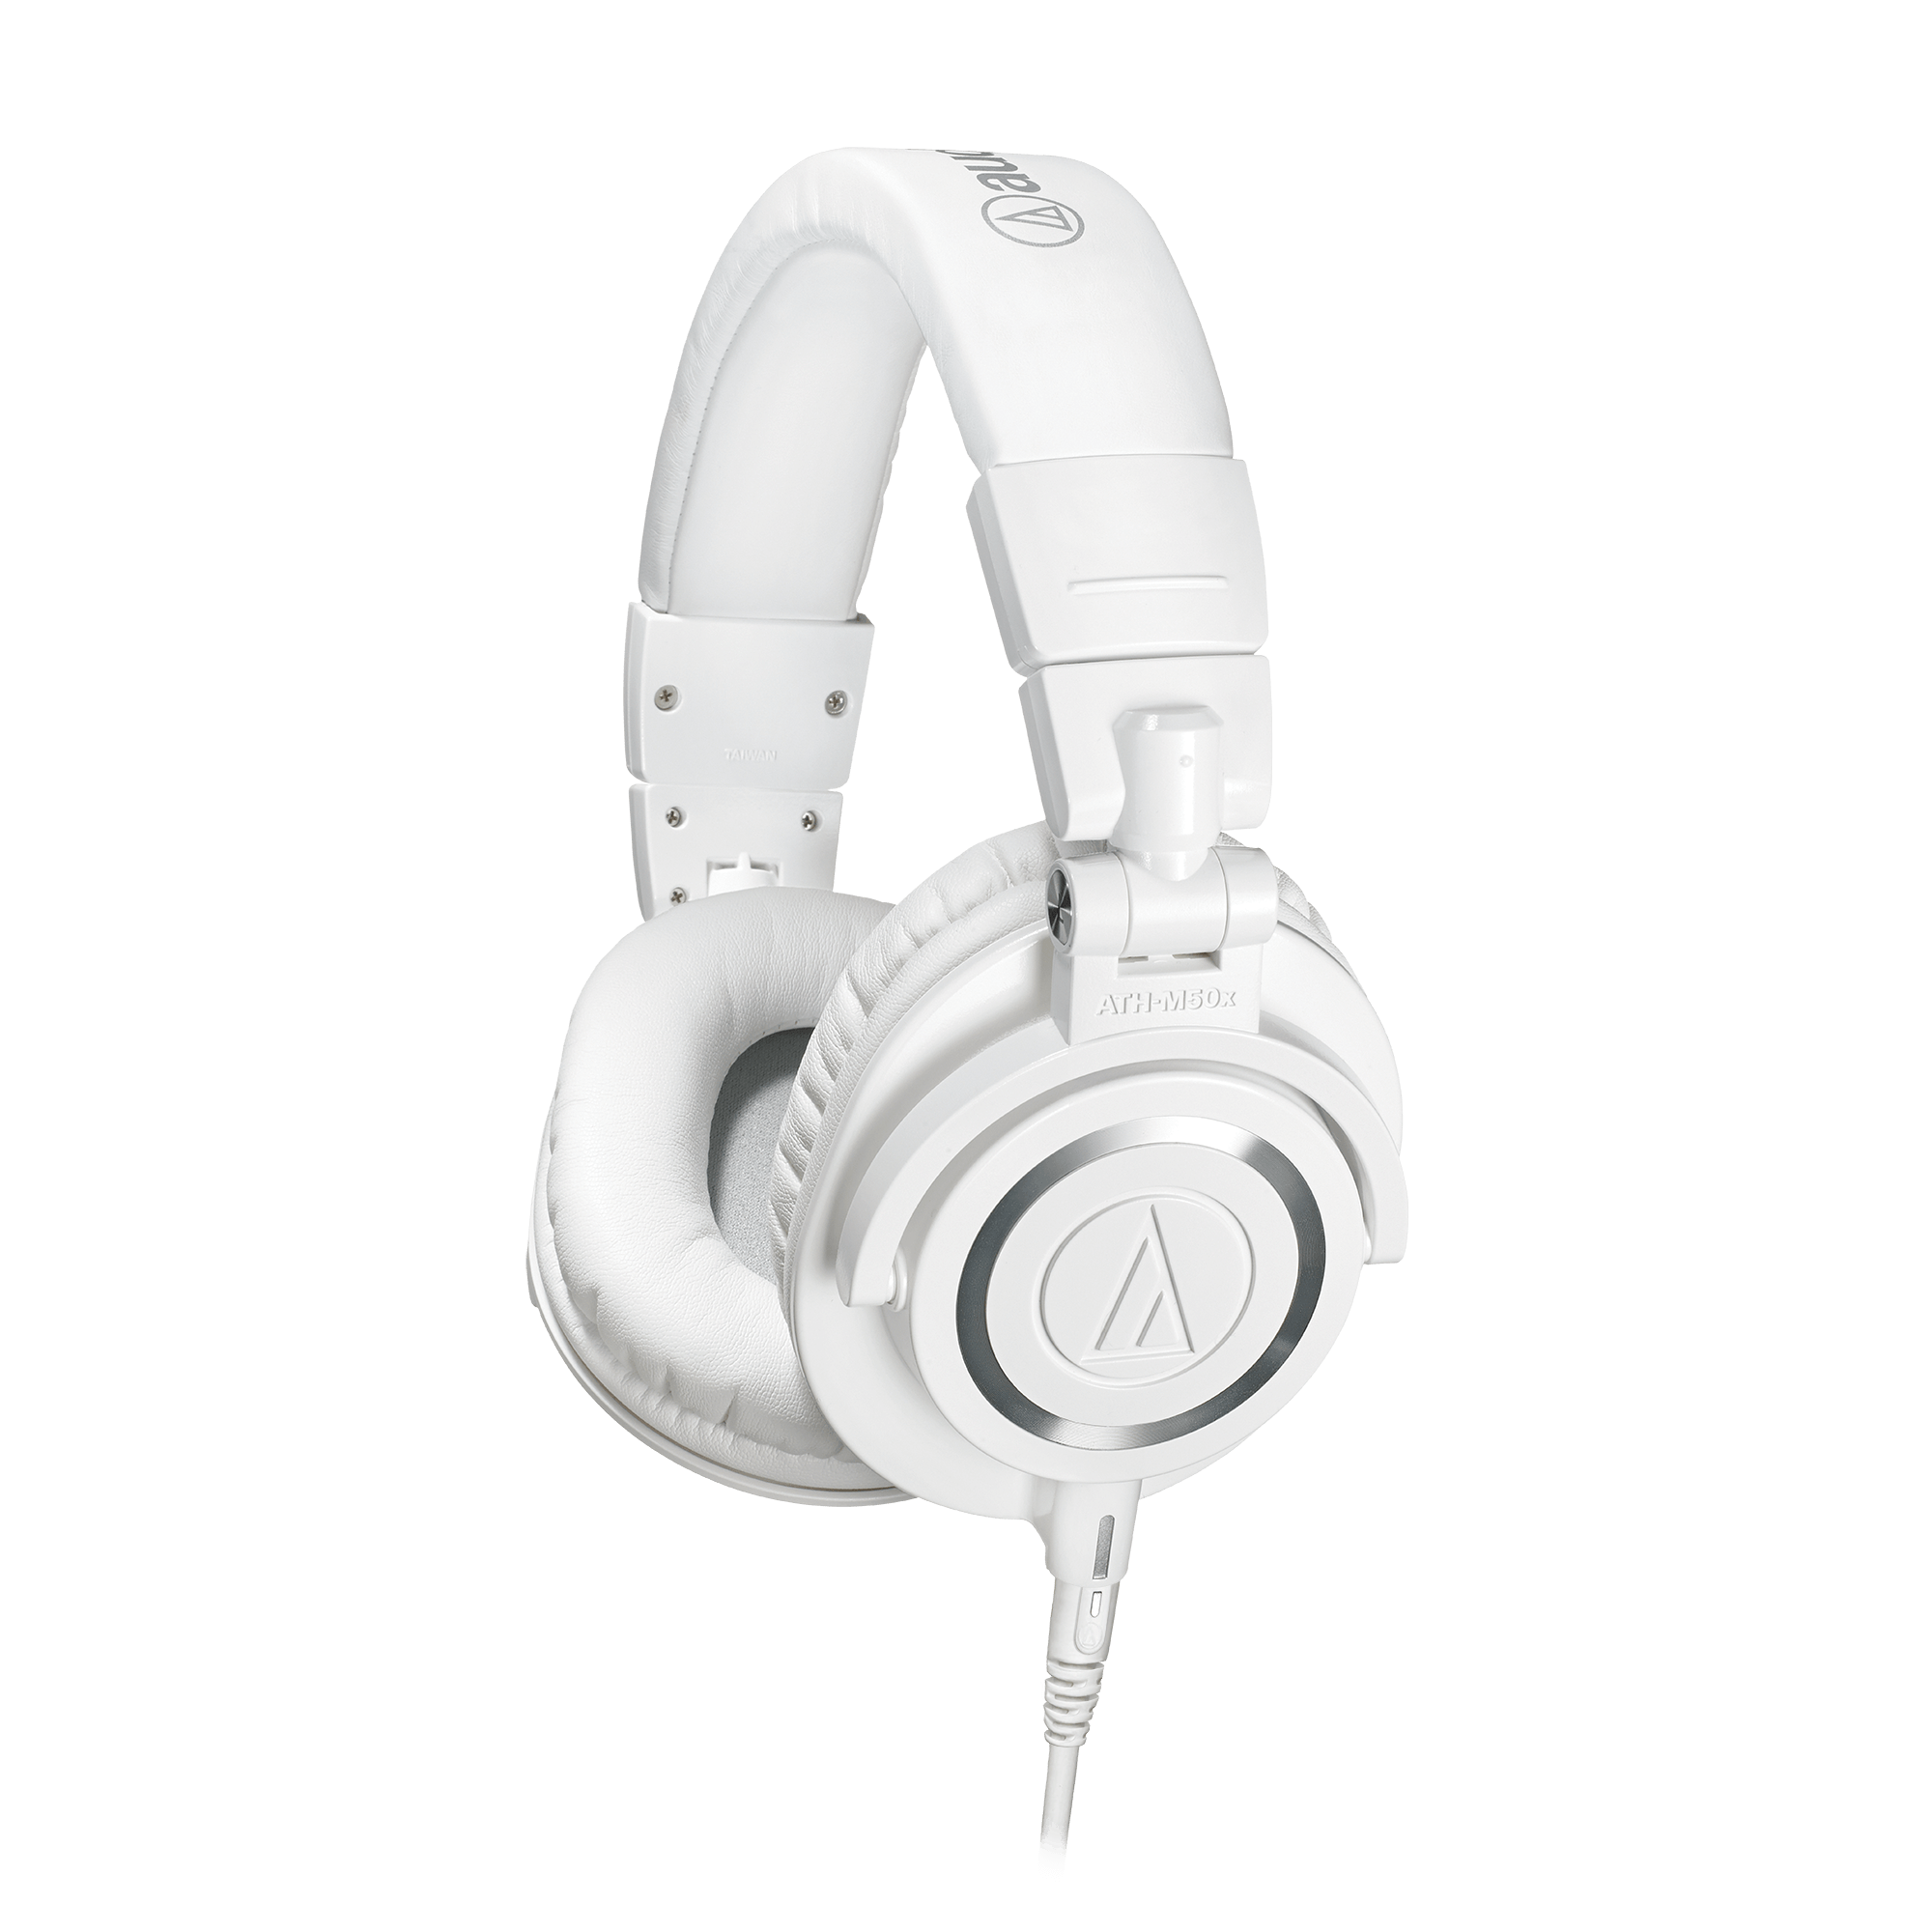 Professional monitor headphones| ATH-M50x |Audio-Technica